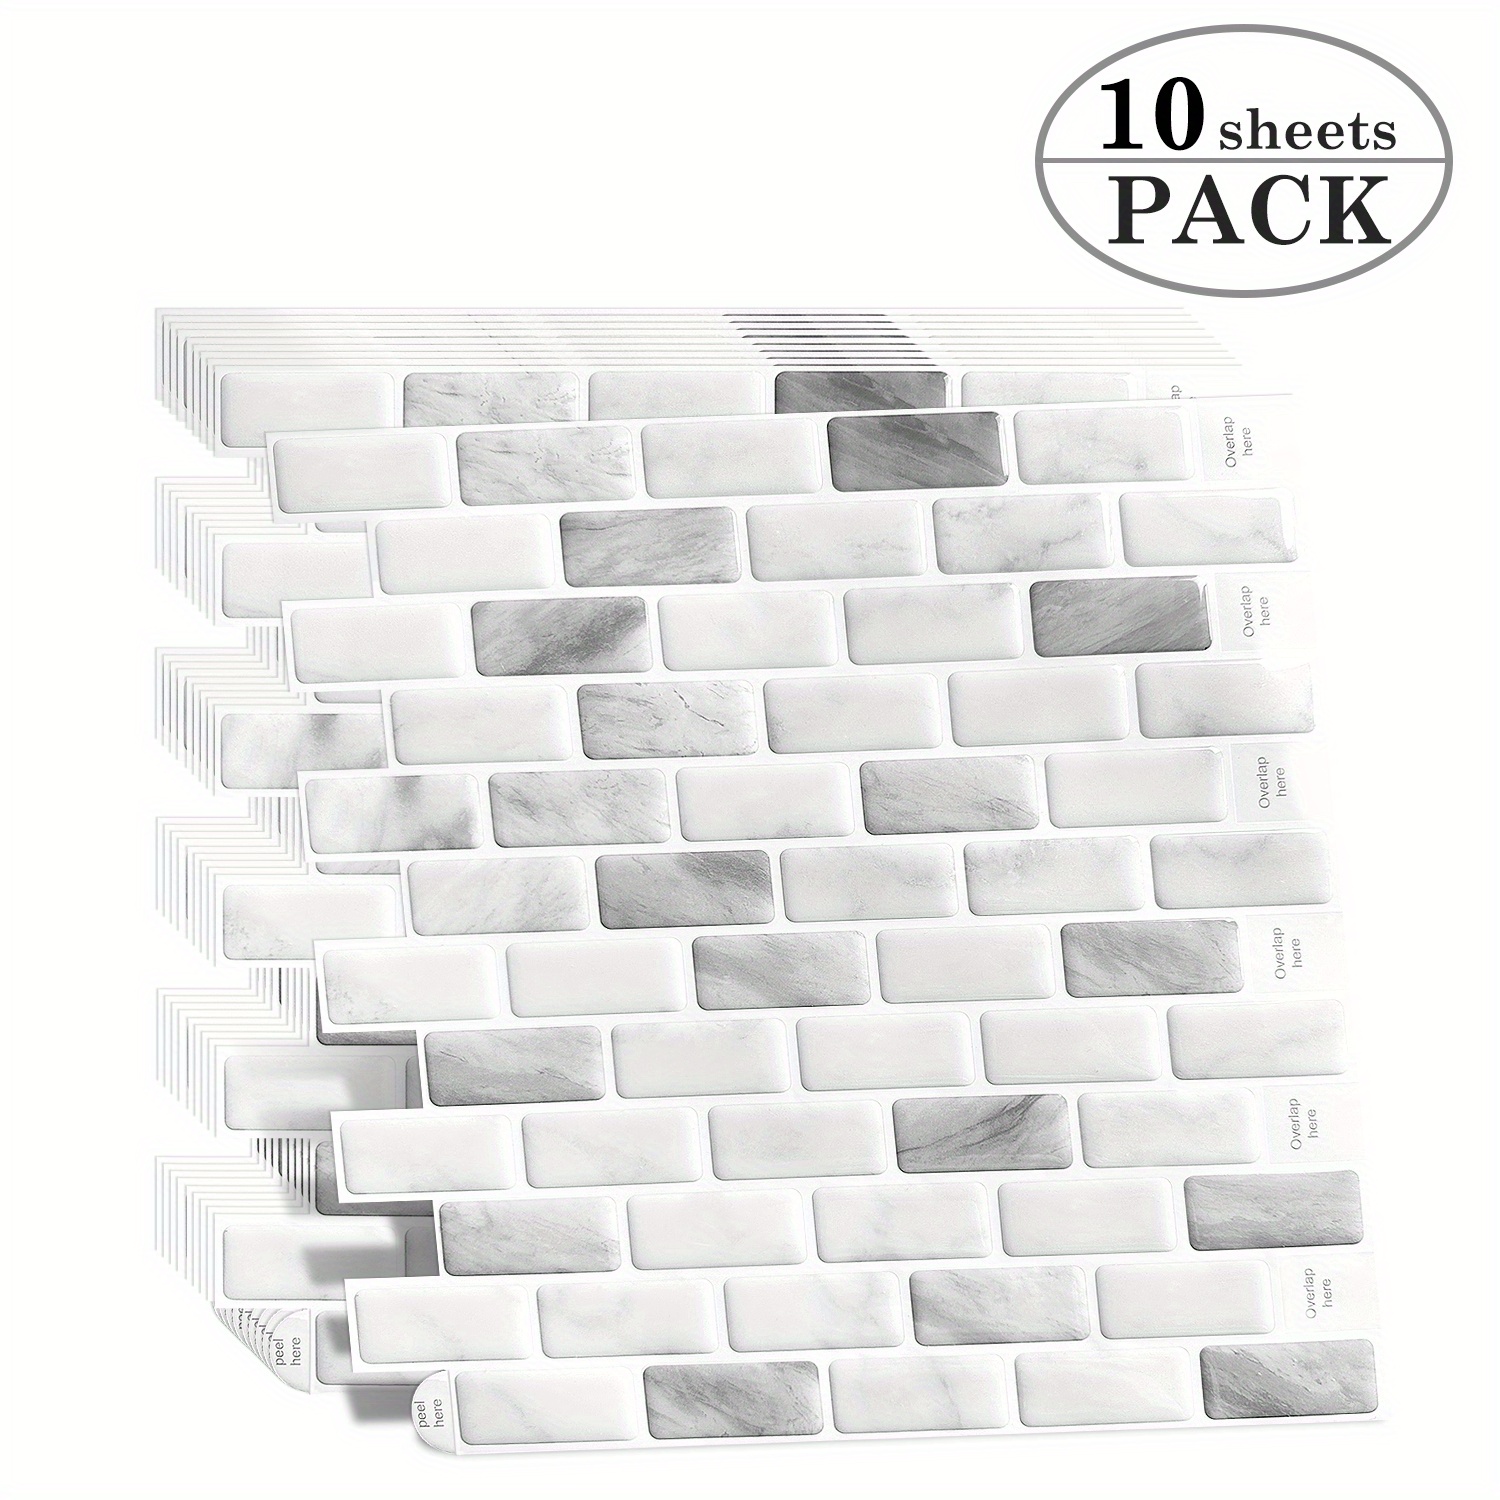 1 Sheet Peel And Stick Backsplash Tiles 10 X 10,3d Self Adhesive  Decorative Wall Paper For Kitchen DIY